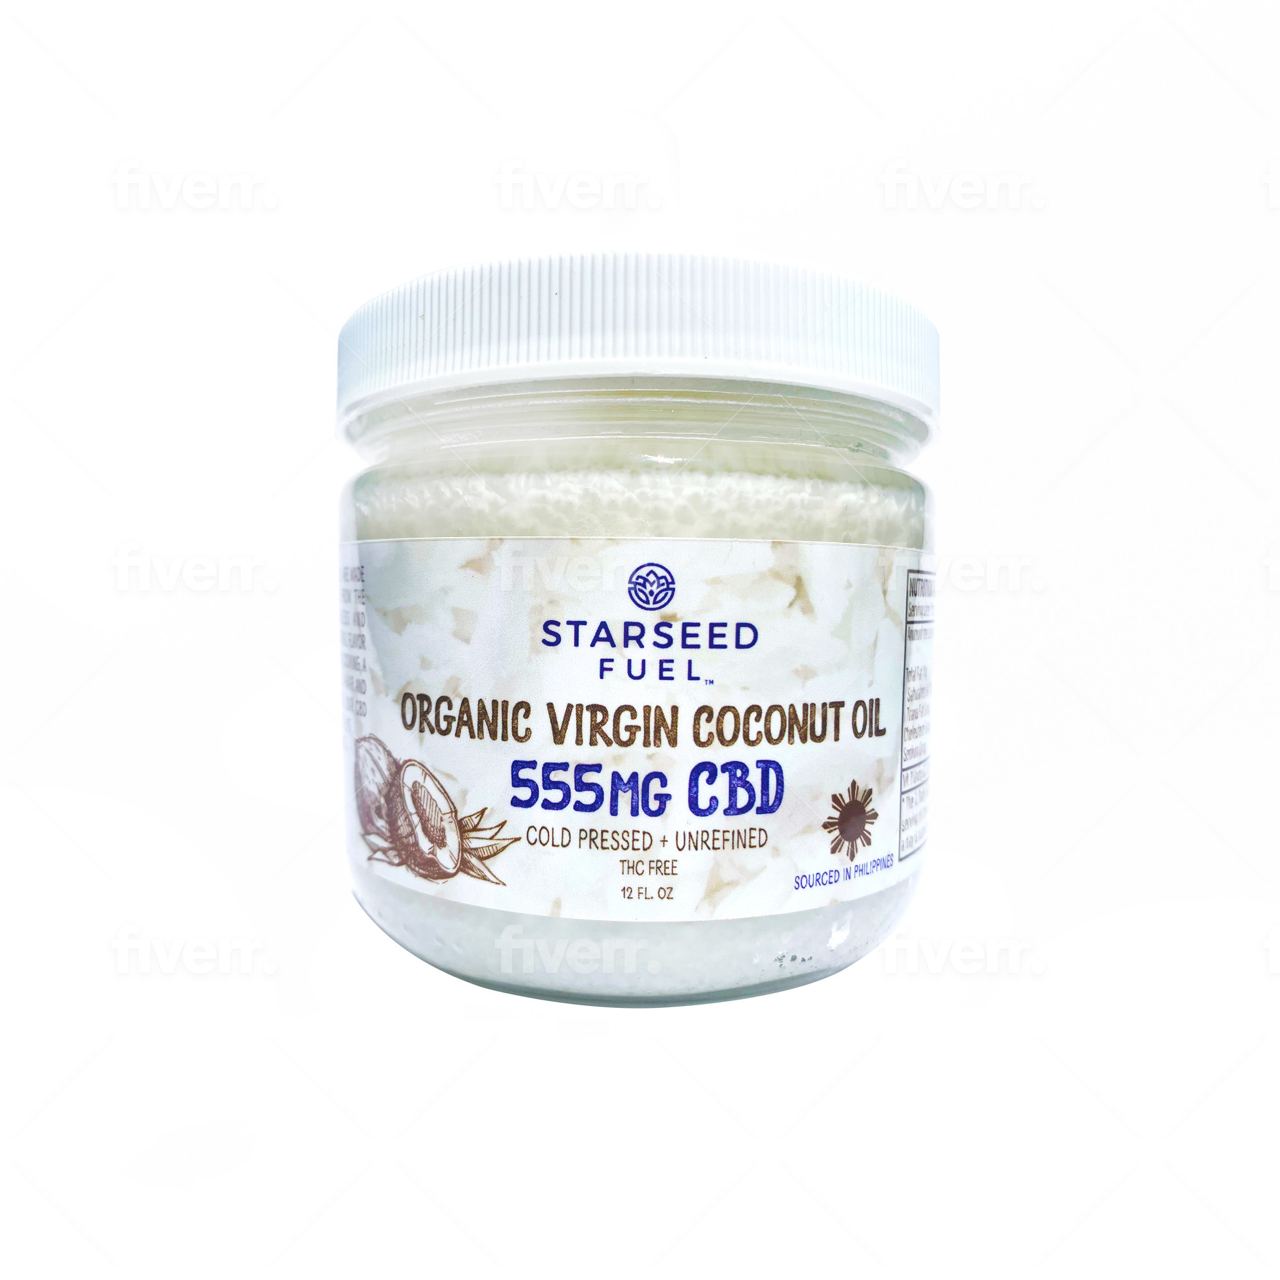 Starseed Fuel Organic Virgin Coconut Oil with 555mg CBD